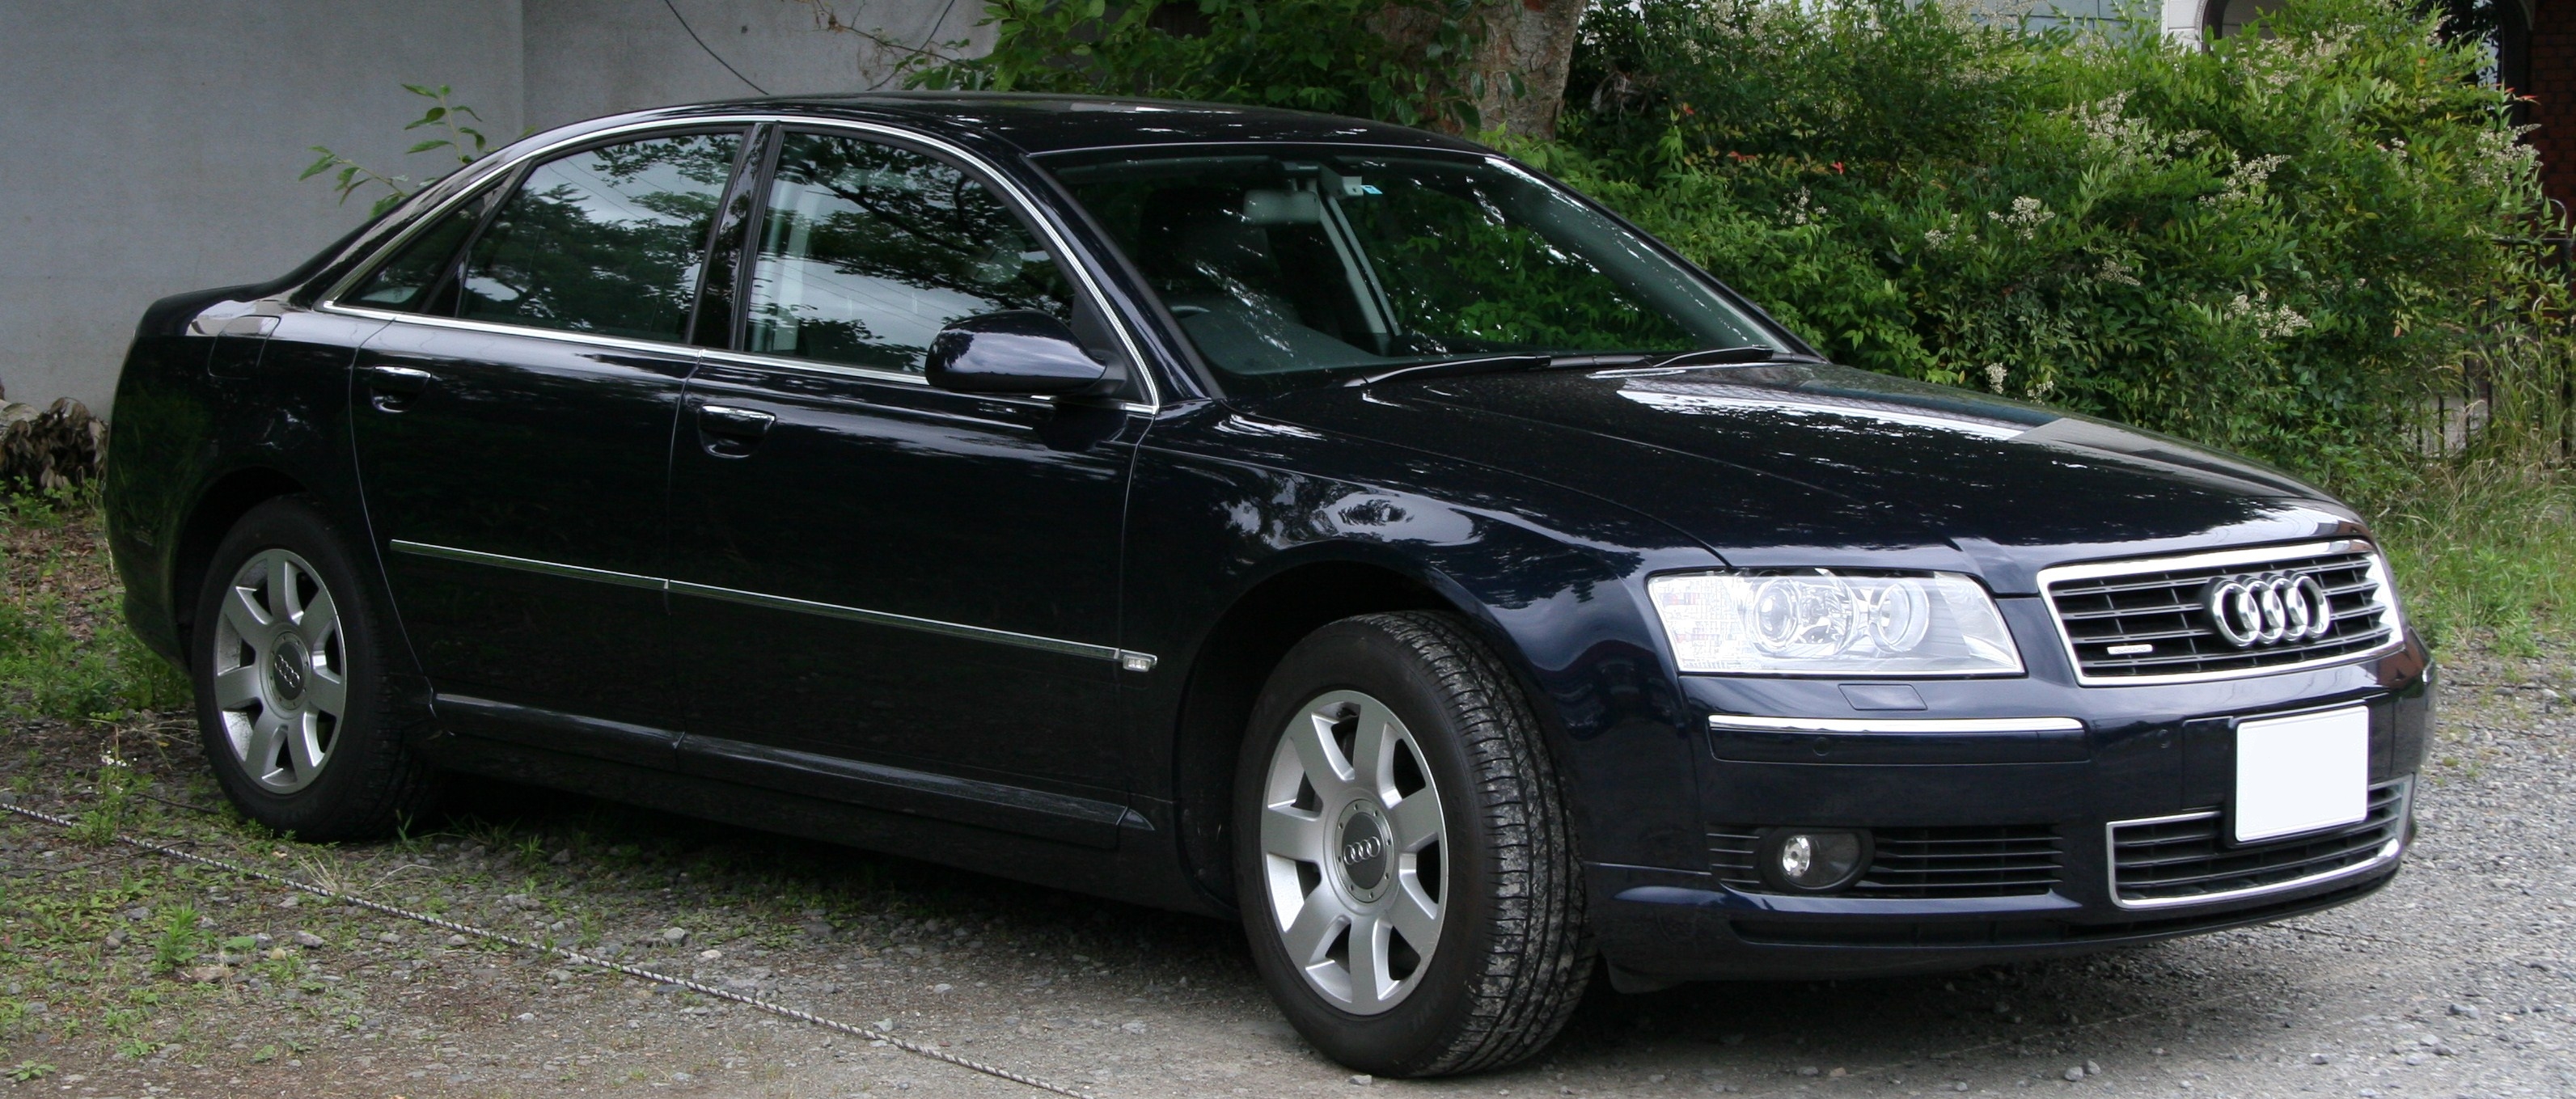 2003 Audi A8 - Information and photos - MOMENTcar